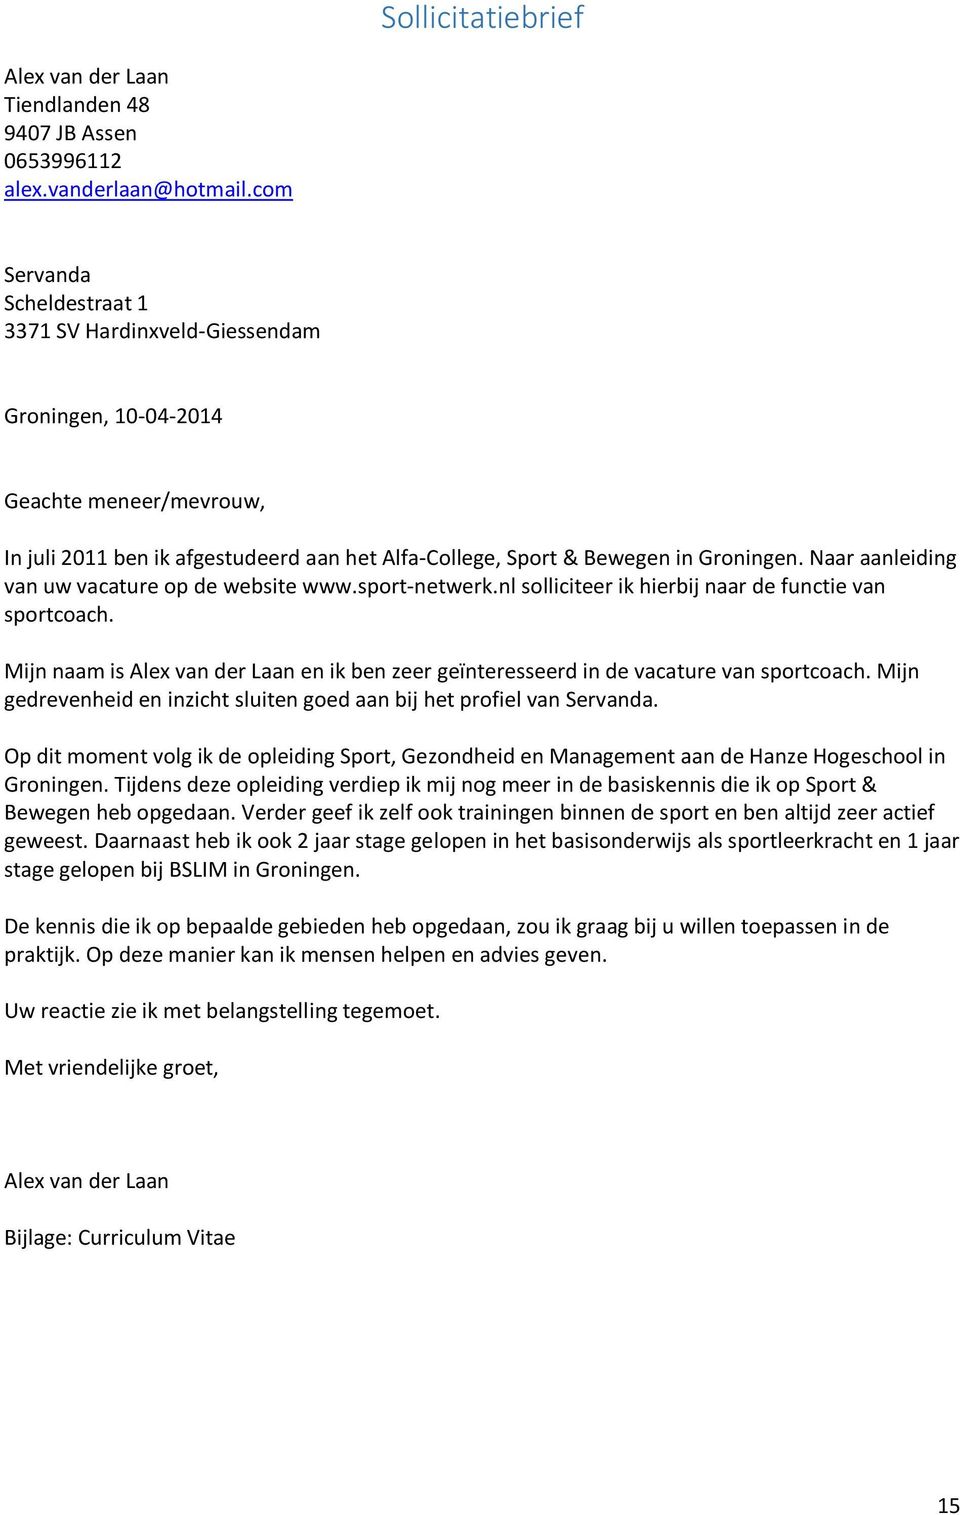 Werkveldorientatie Alex Van Der Laan Hanze Hogeschool Groningen Jan Willem Bruining Slb Pdf Free Download